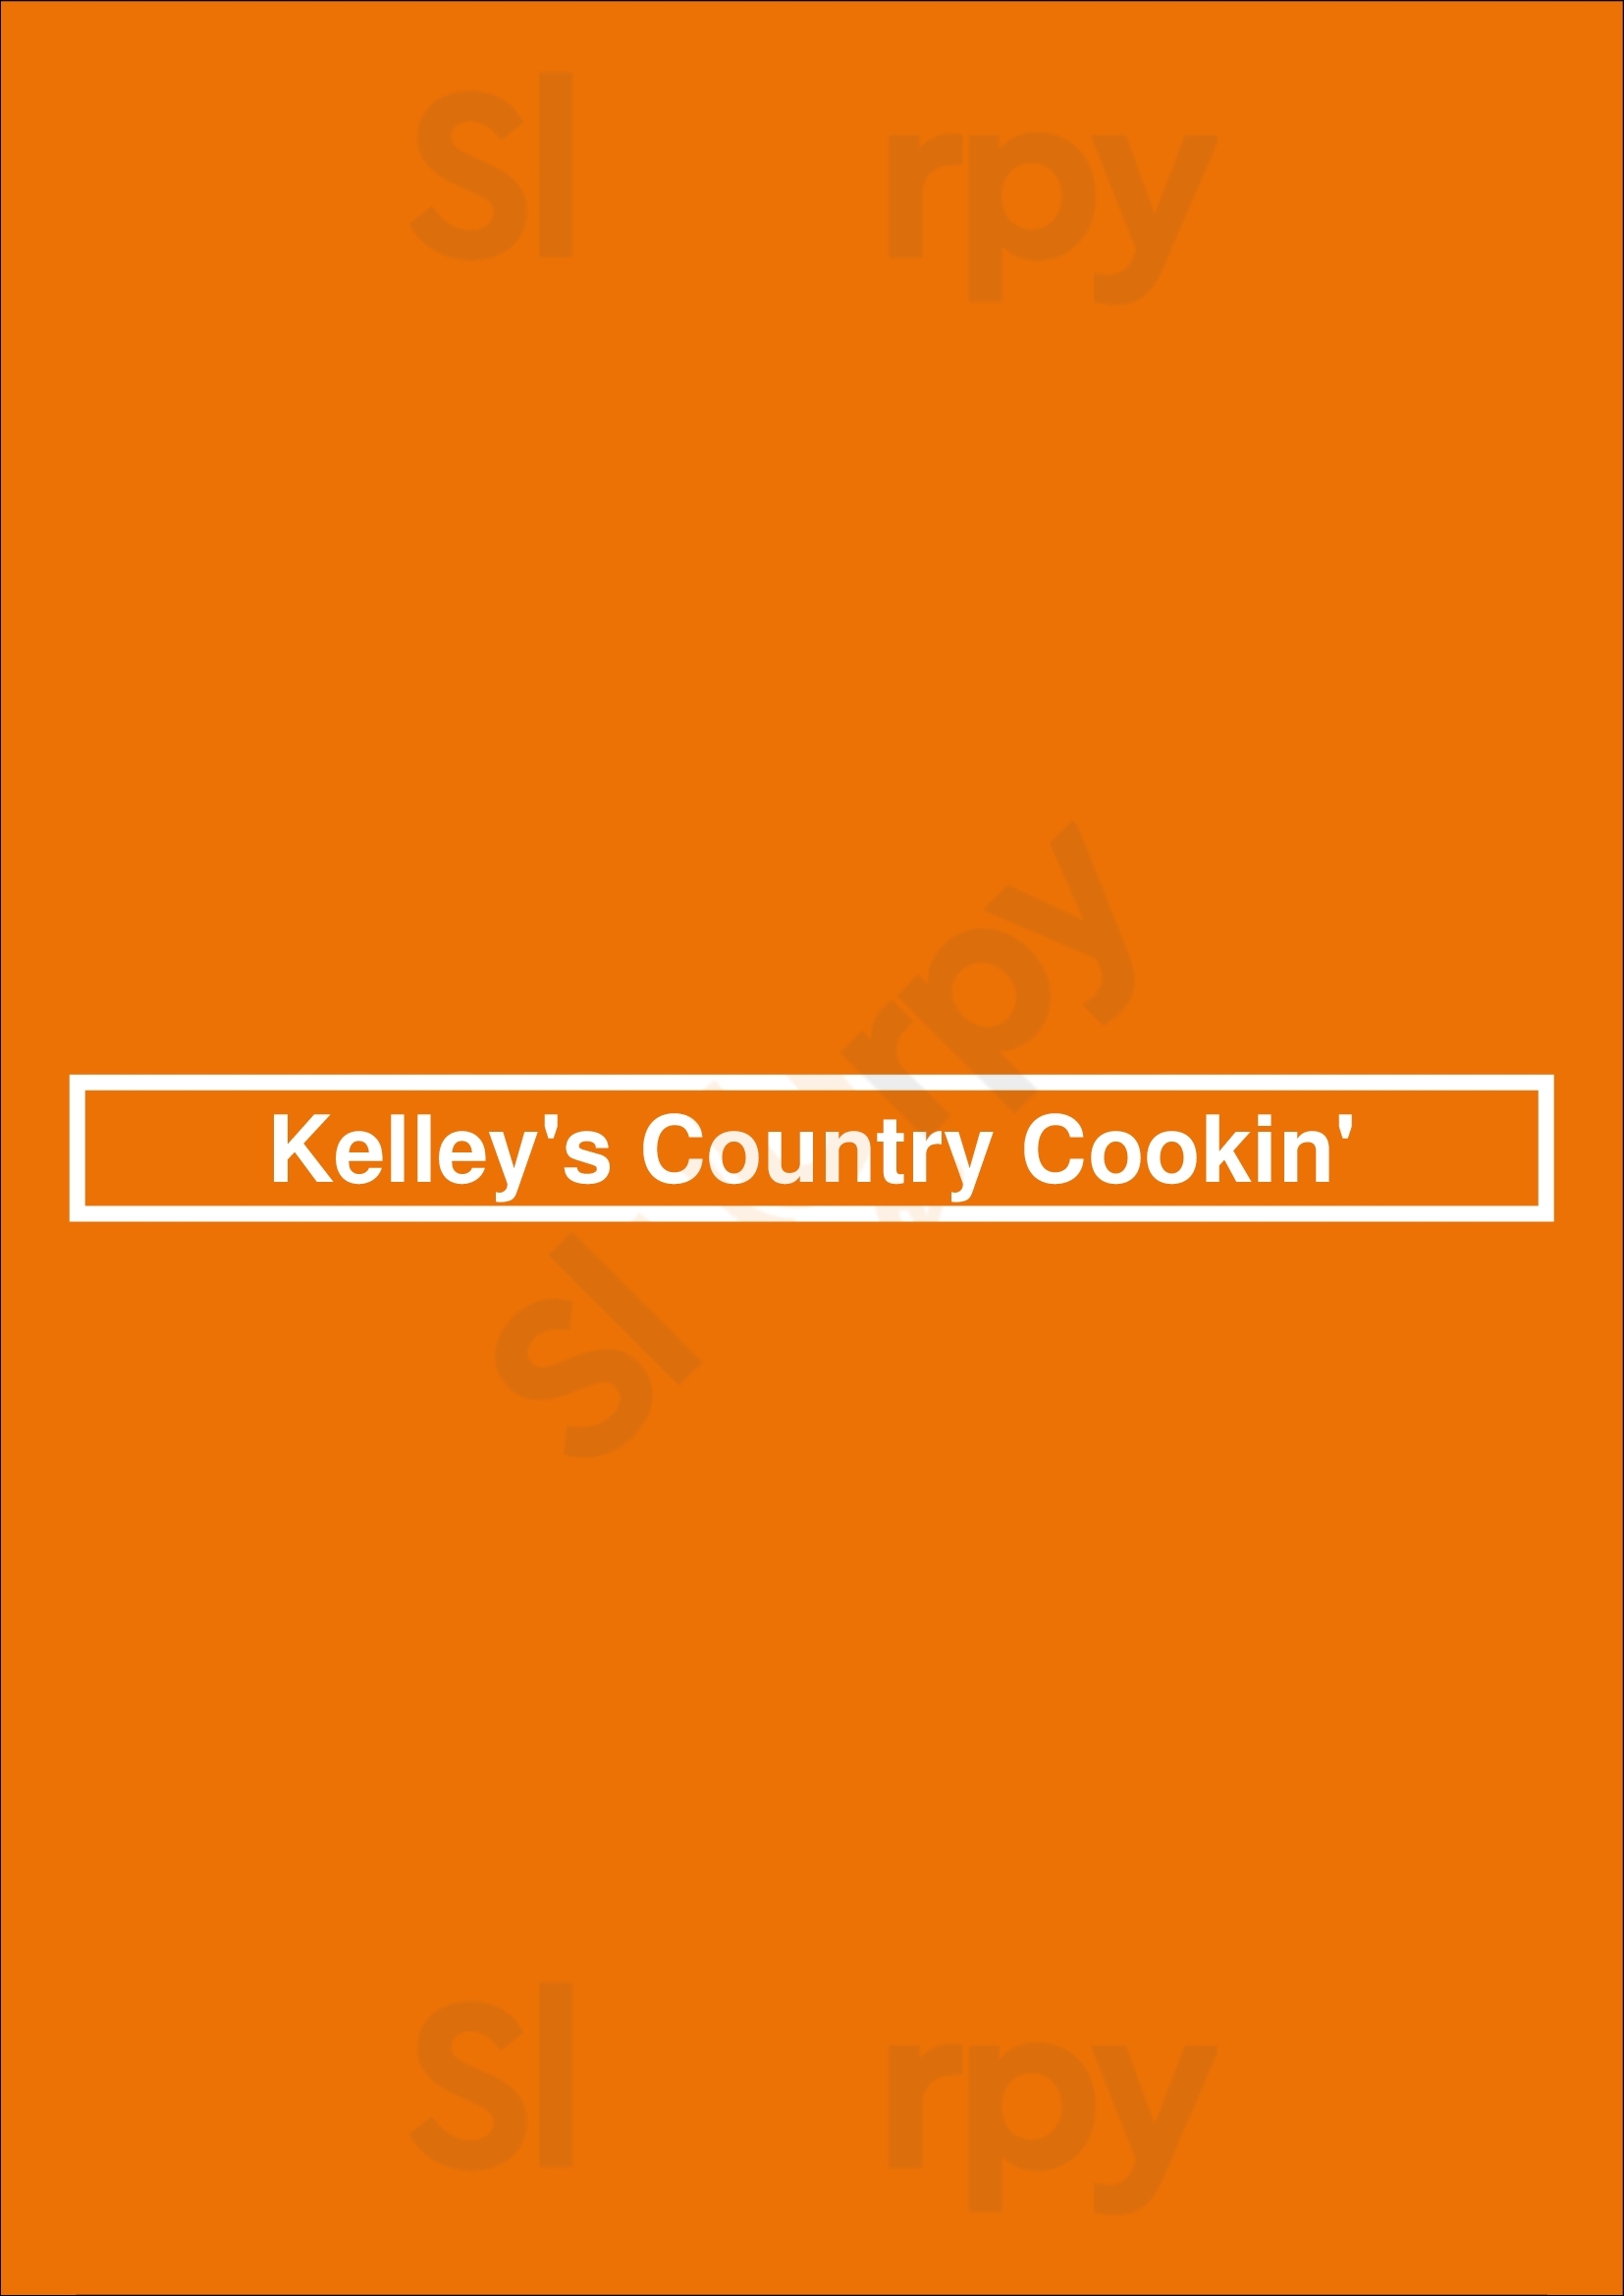 Kelley's Country Cookin' League City Menu - 1